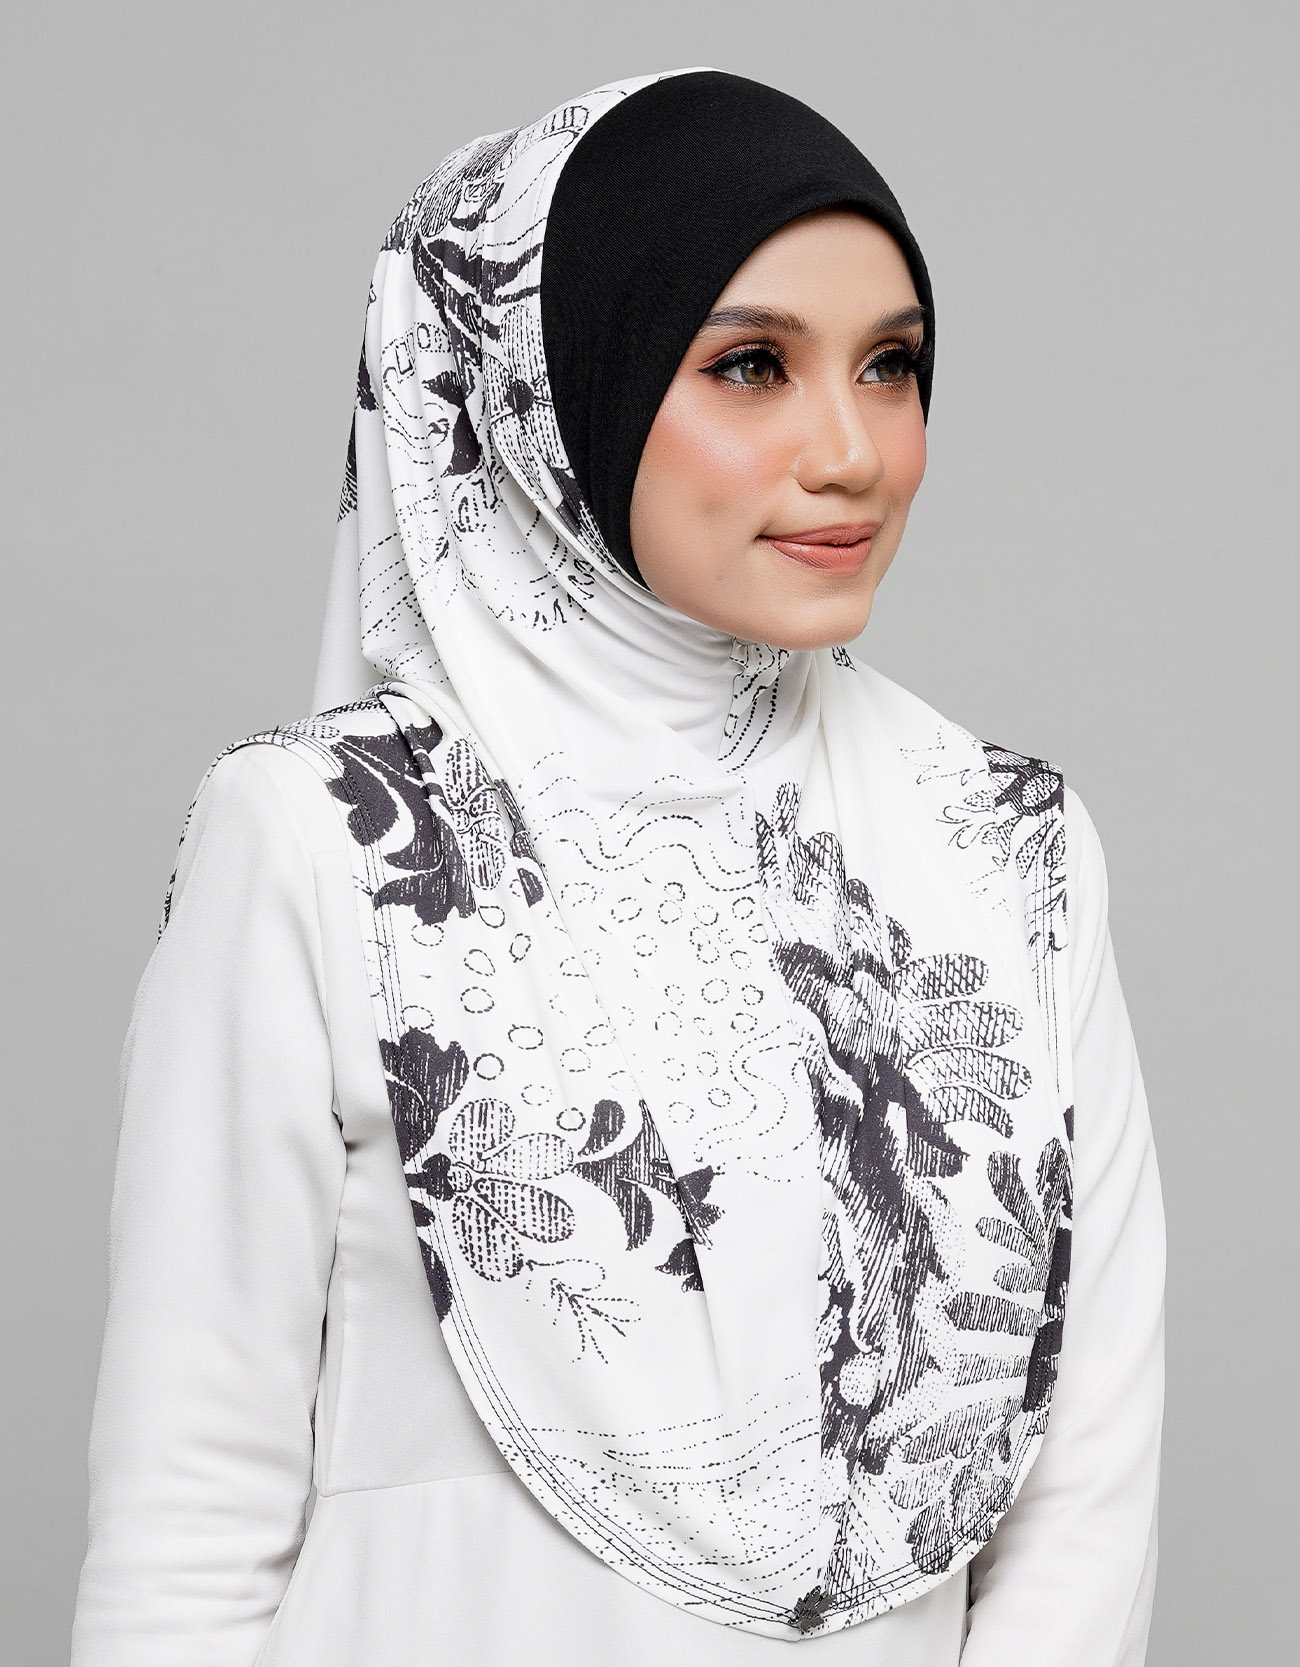 Express Hijab Damia Signature 07 - Black Edition&w=300&zc=1